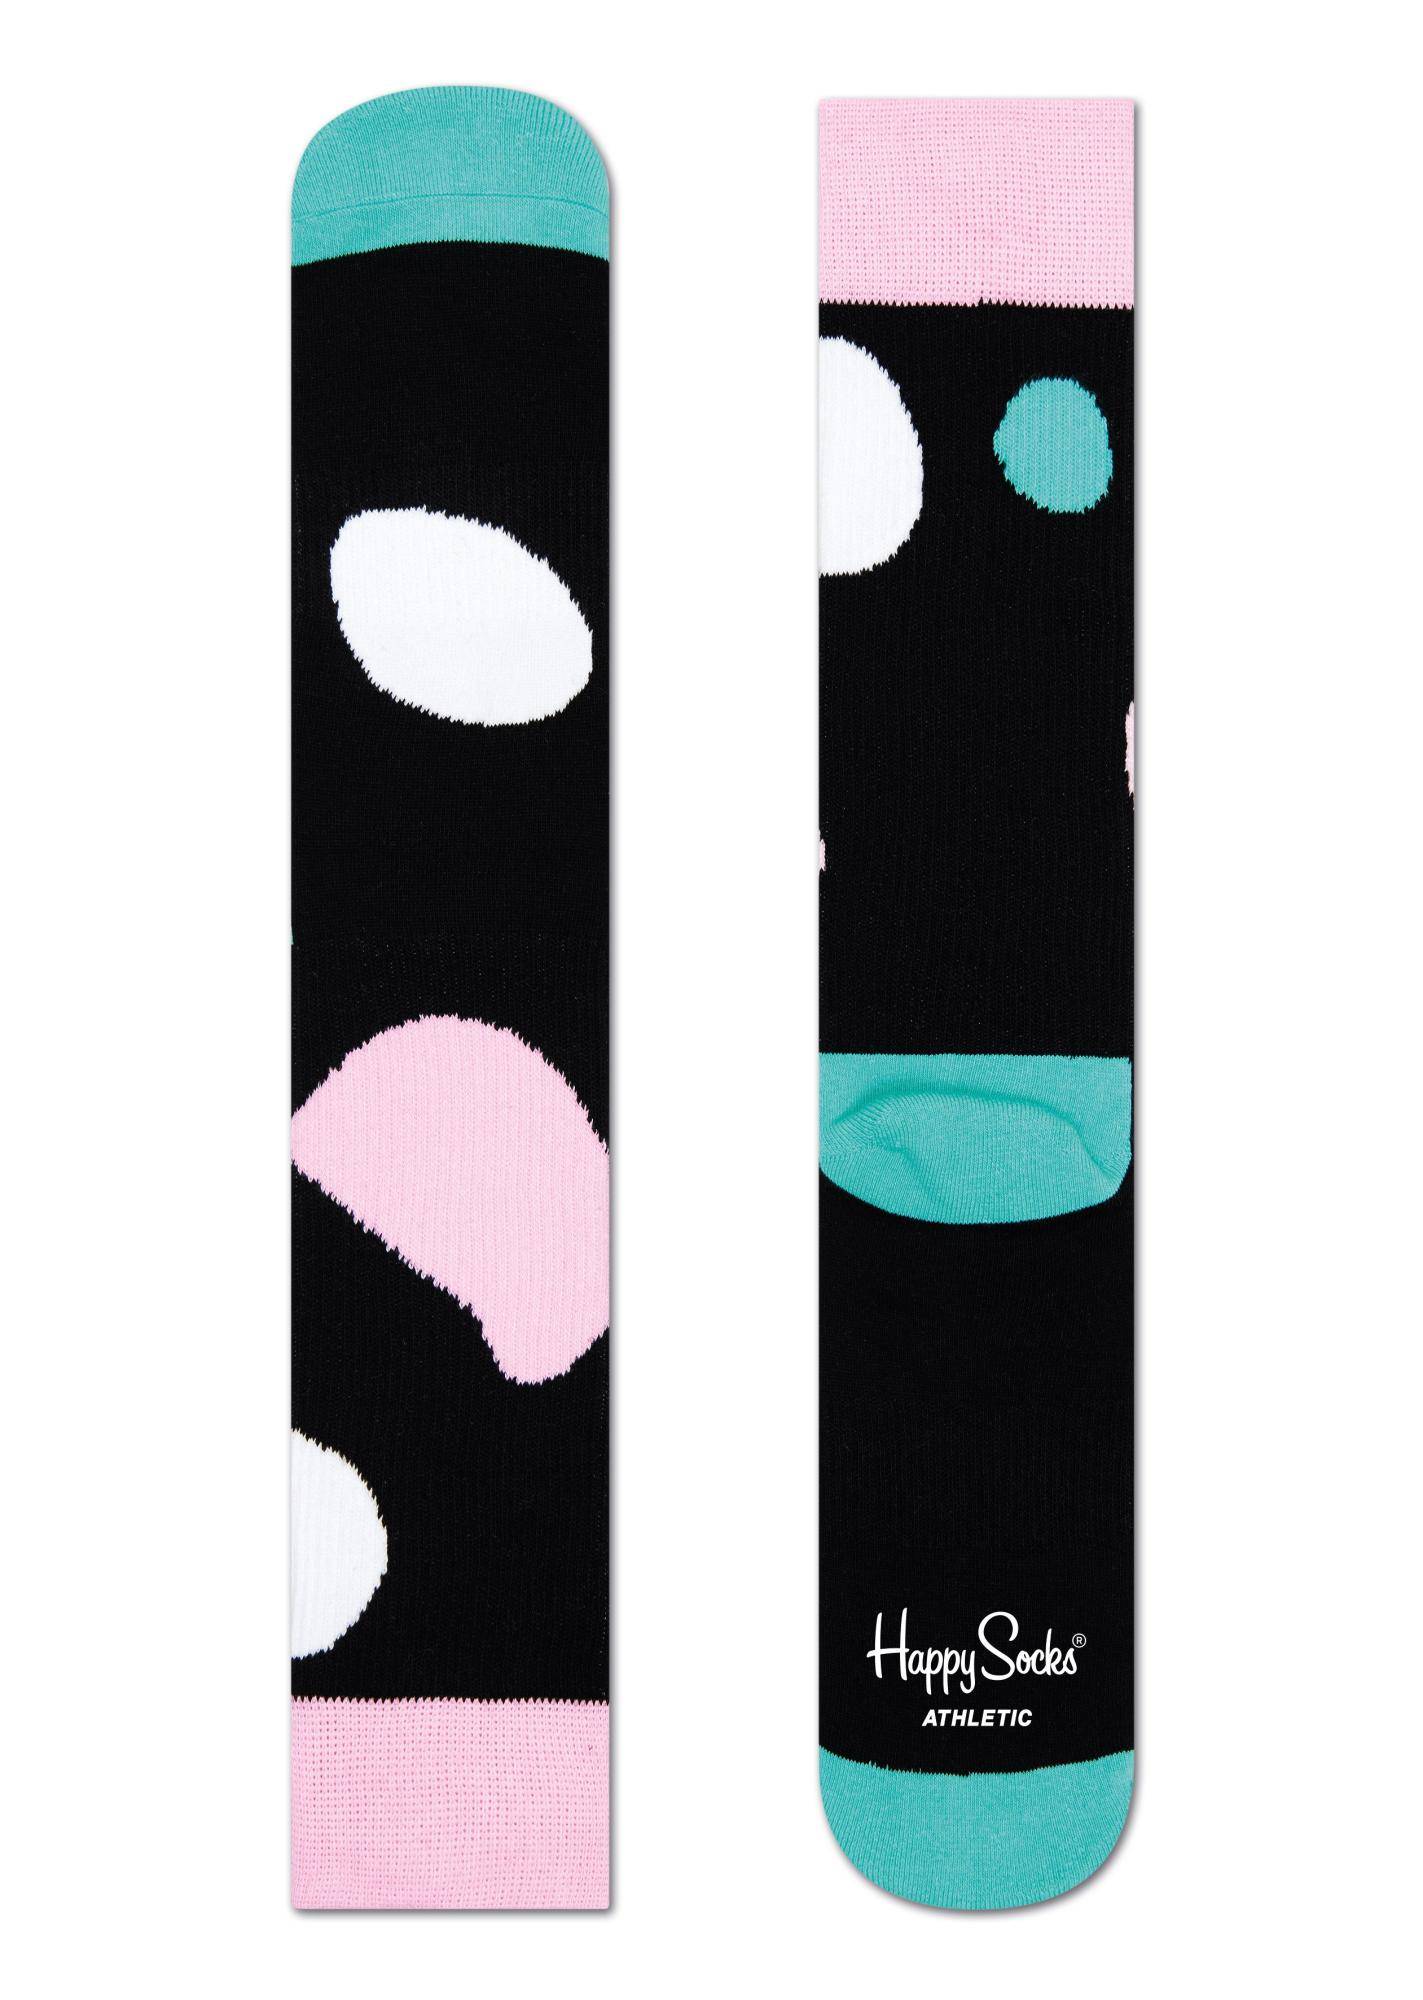 Носки Happy socks ATHLETIC ATTF27 099, размер 29